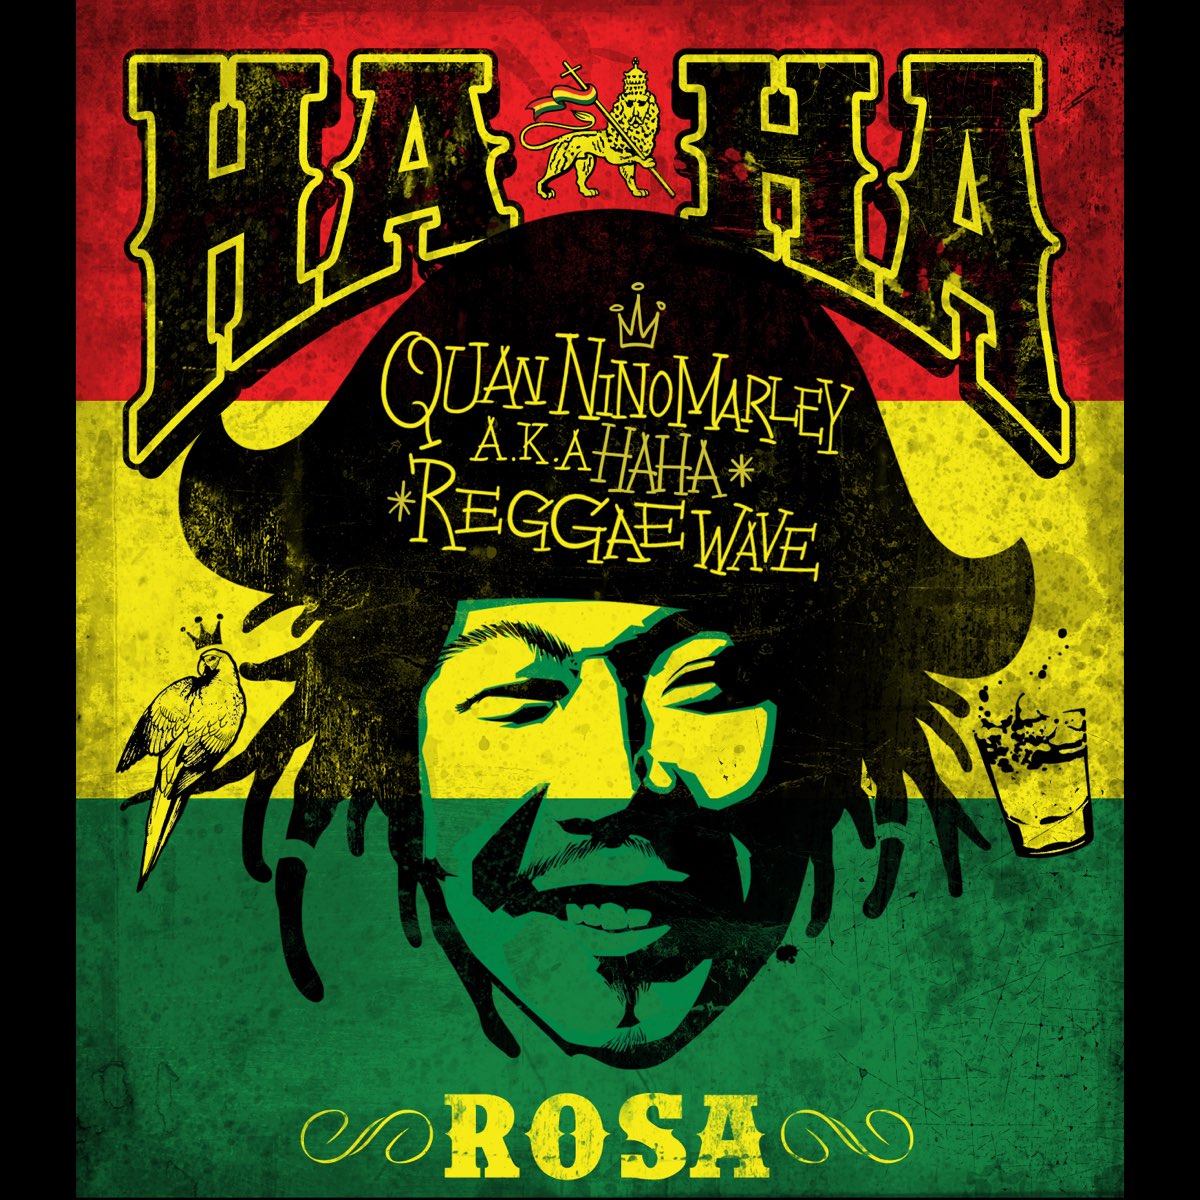 Quan Ninomarley a.K.A Haha Reggae Wave by HaHa on Apple Music